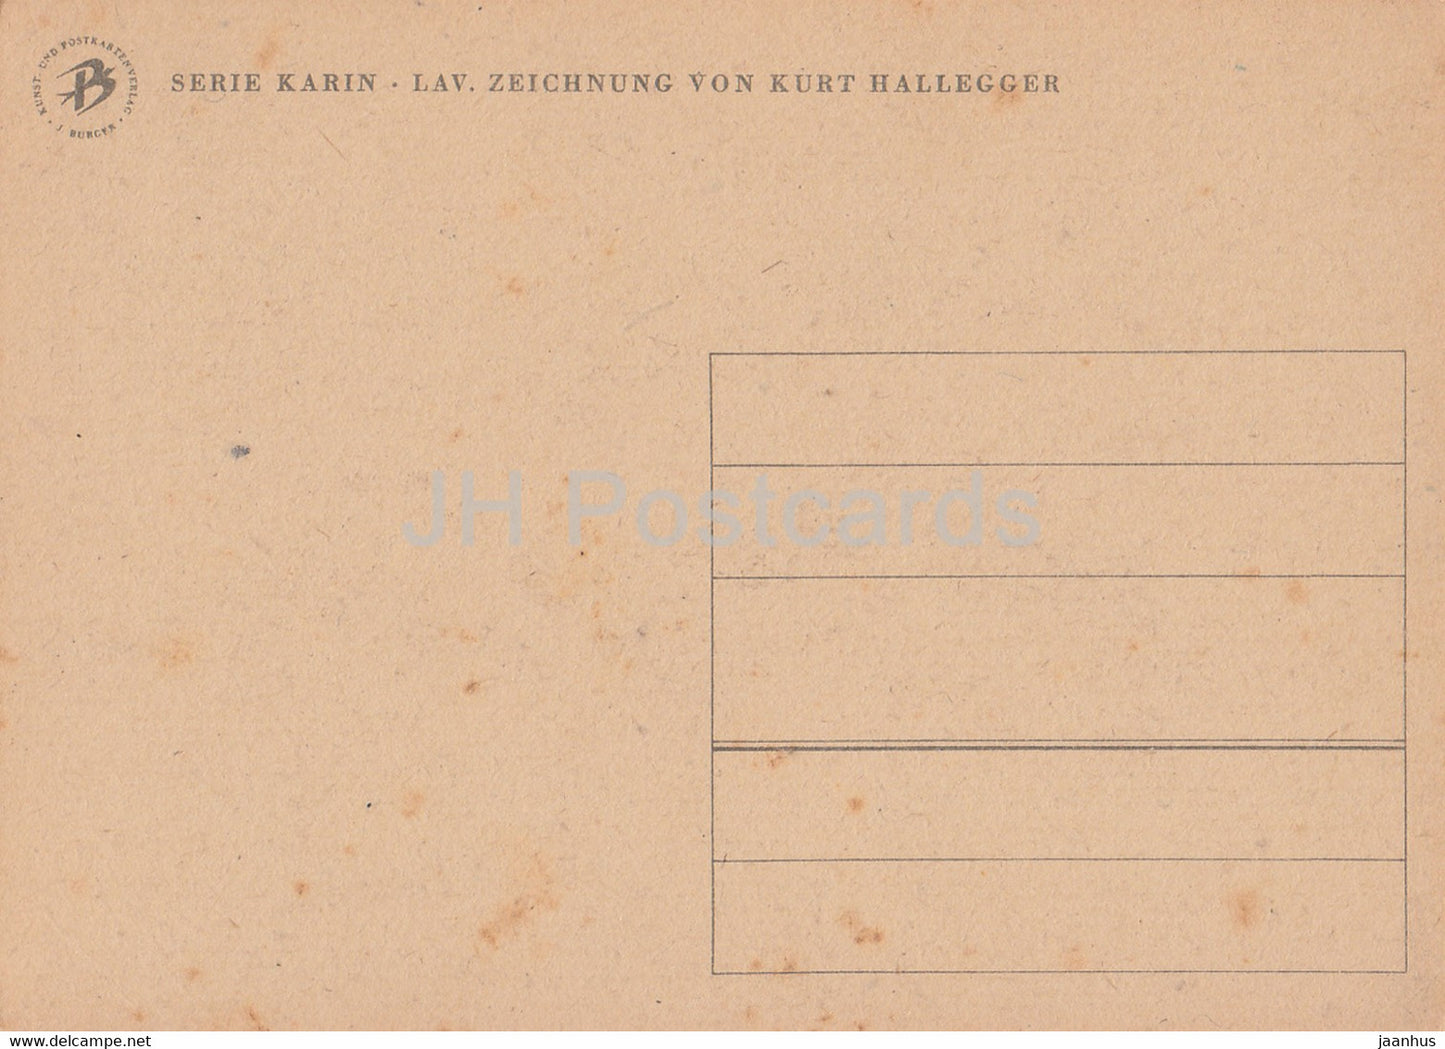 dessin de Kurt Hallegger - Série Karin - carte postale ancienne - Allemagne - inutilisée